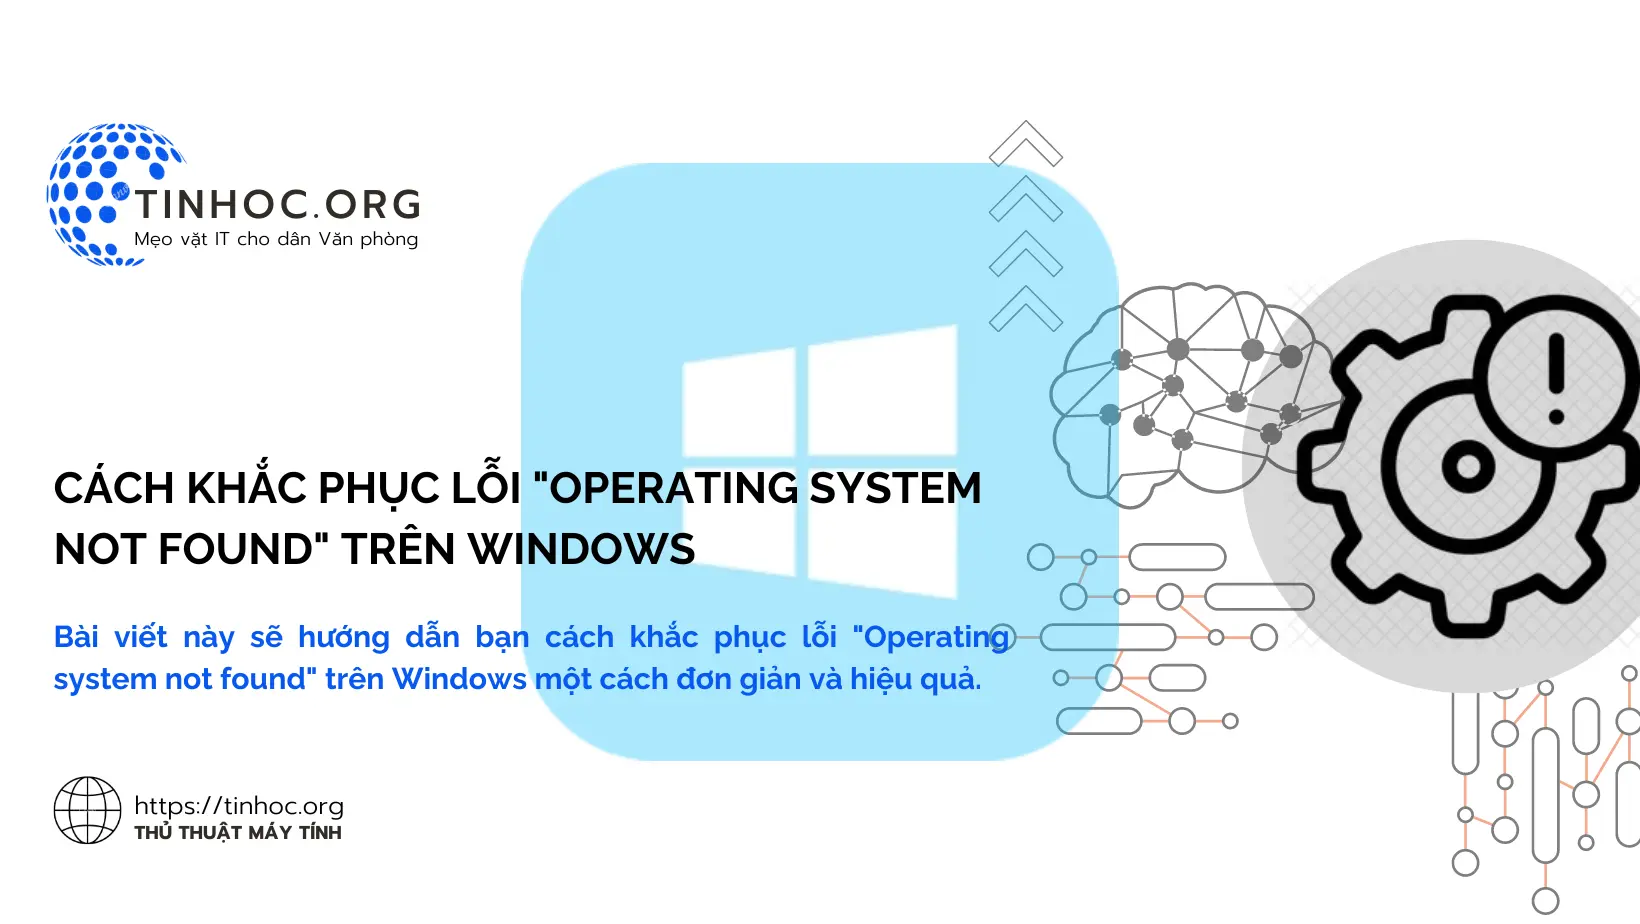 Cách khắc phục lỗi "Operating system not found" trên Windows